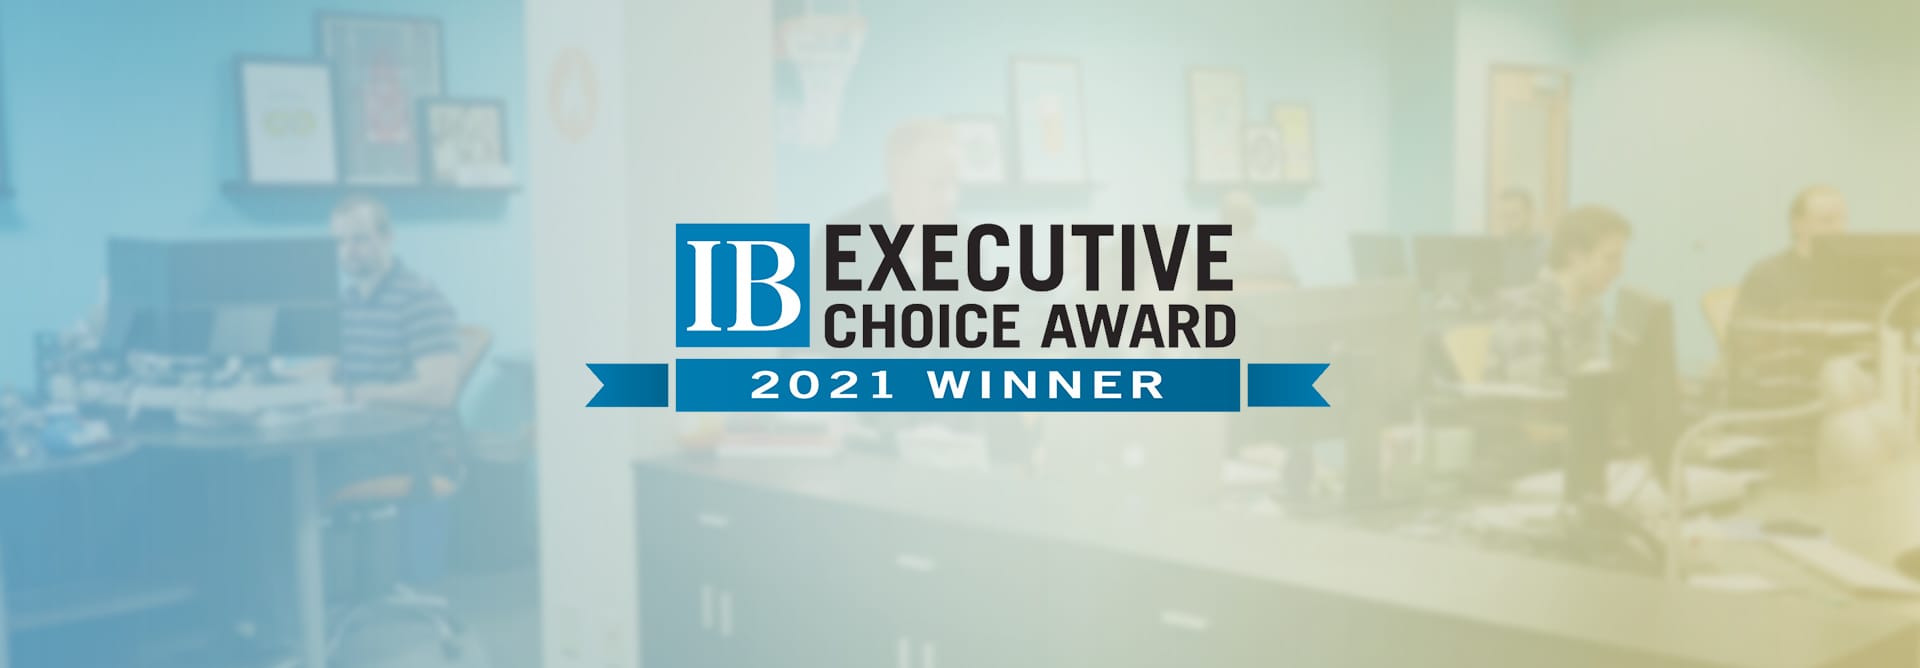 Powderkeg selected as the winner of the 2021 InBusiness Executive Choice Award